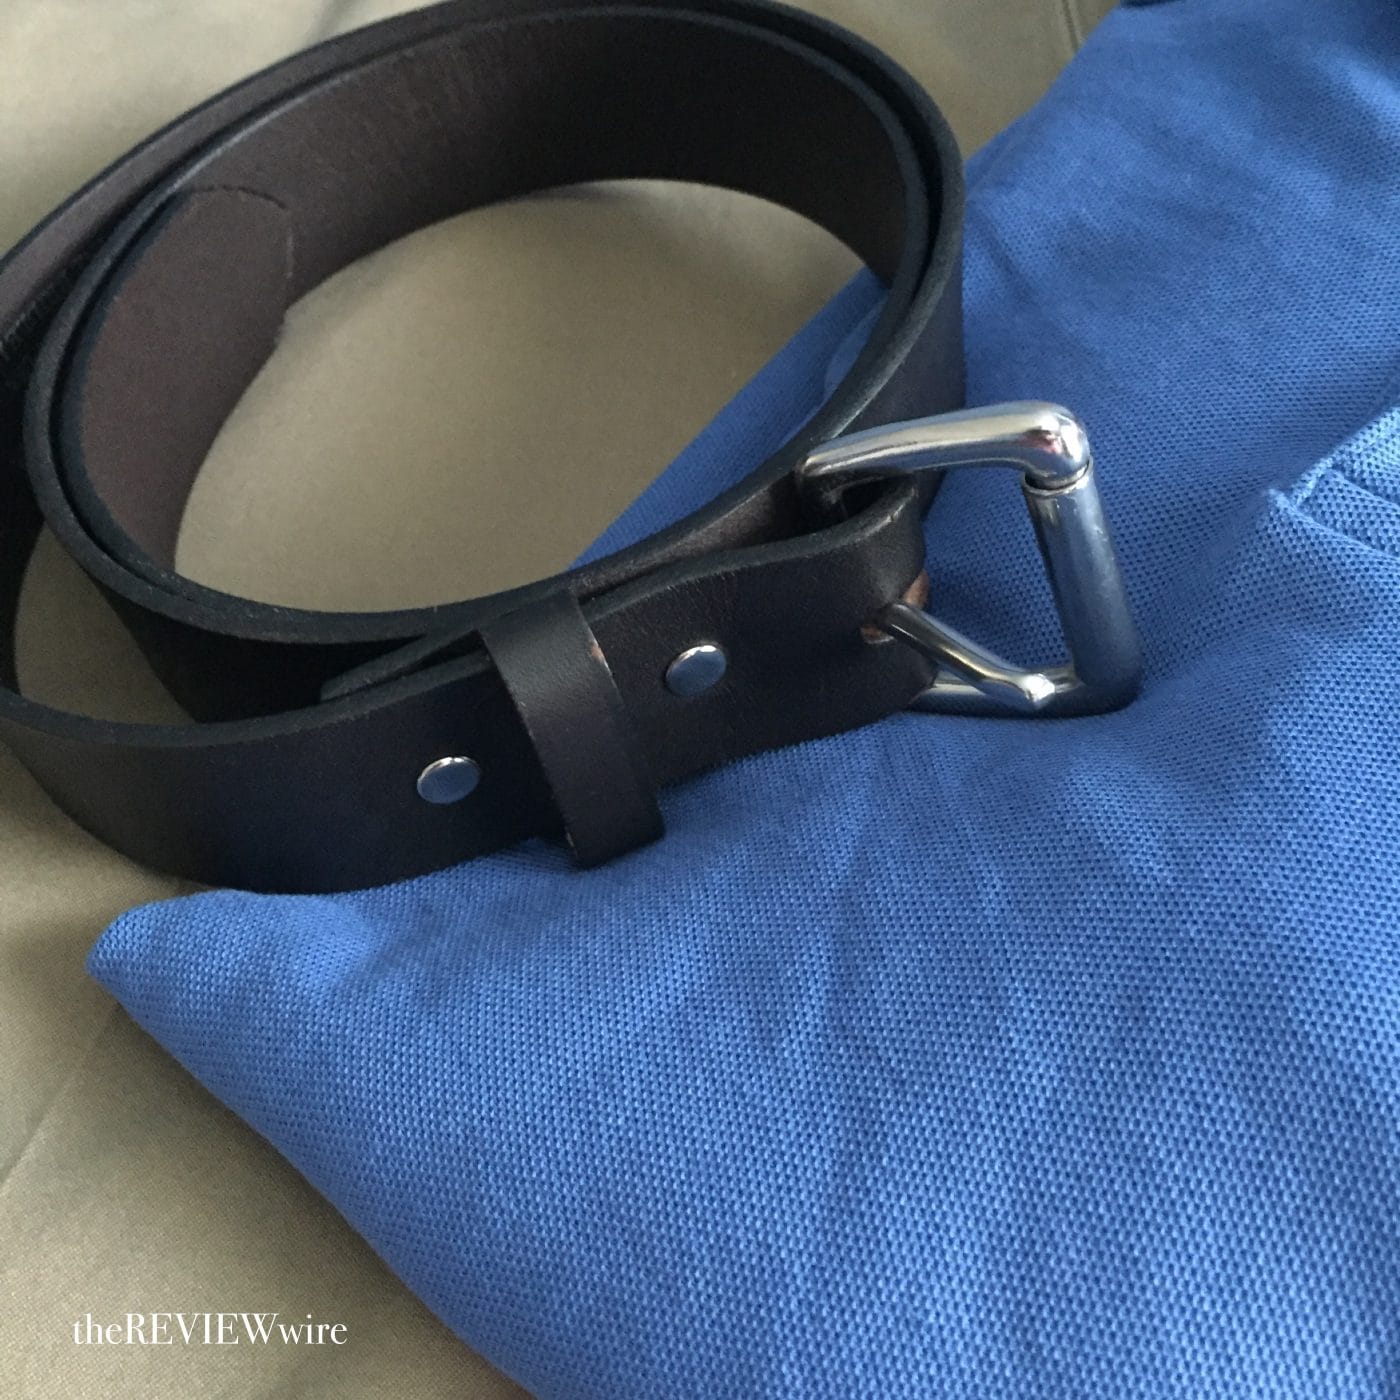 Filson Leather Belt